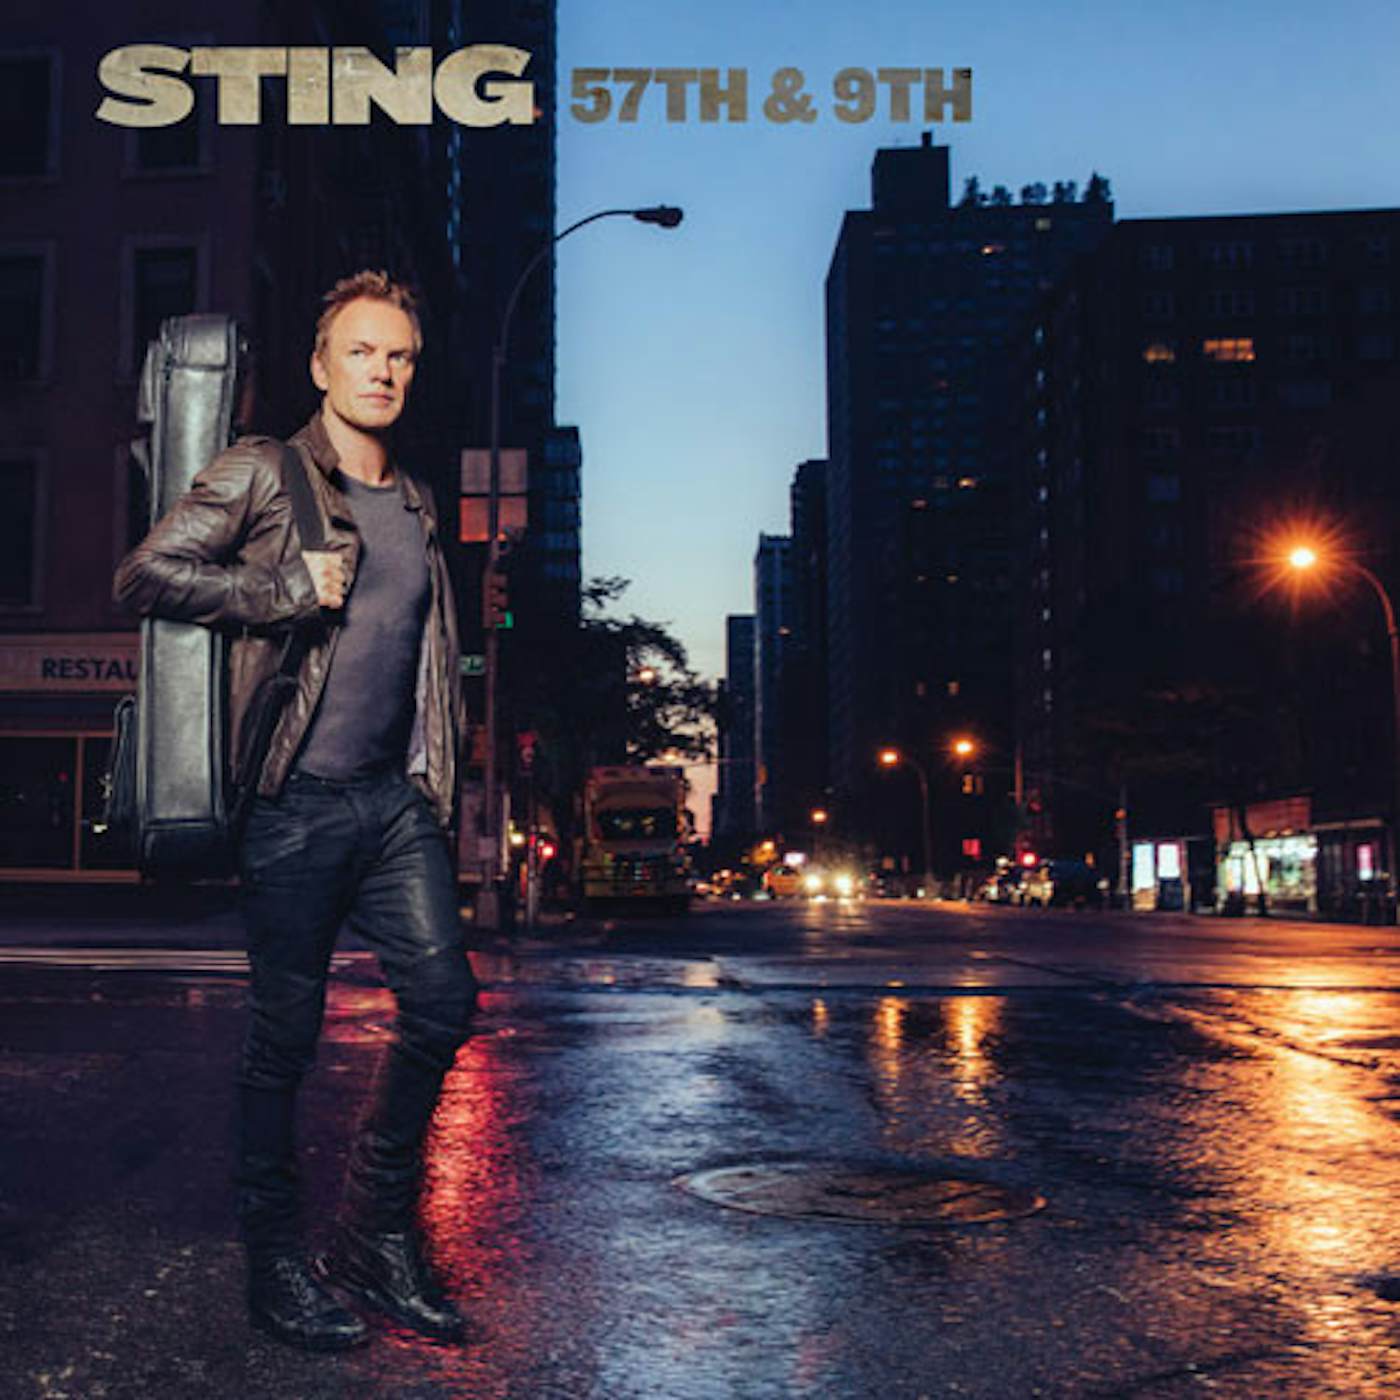 Sting 57TH & 9TH Vinyl Record